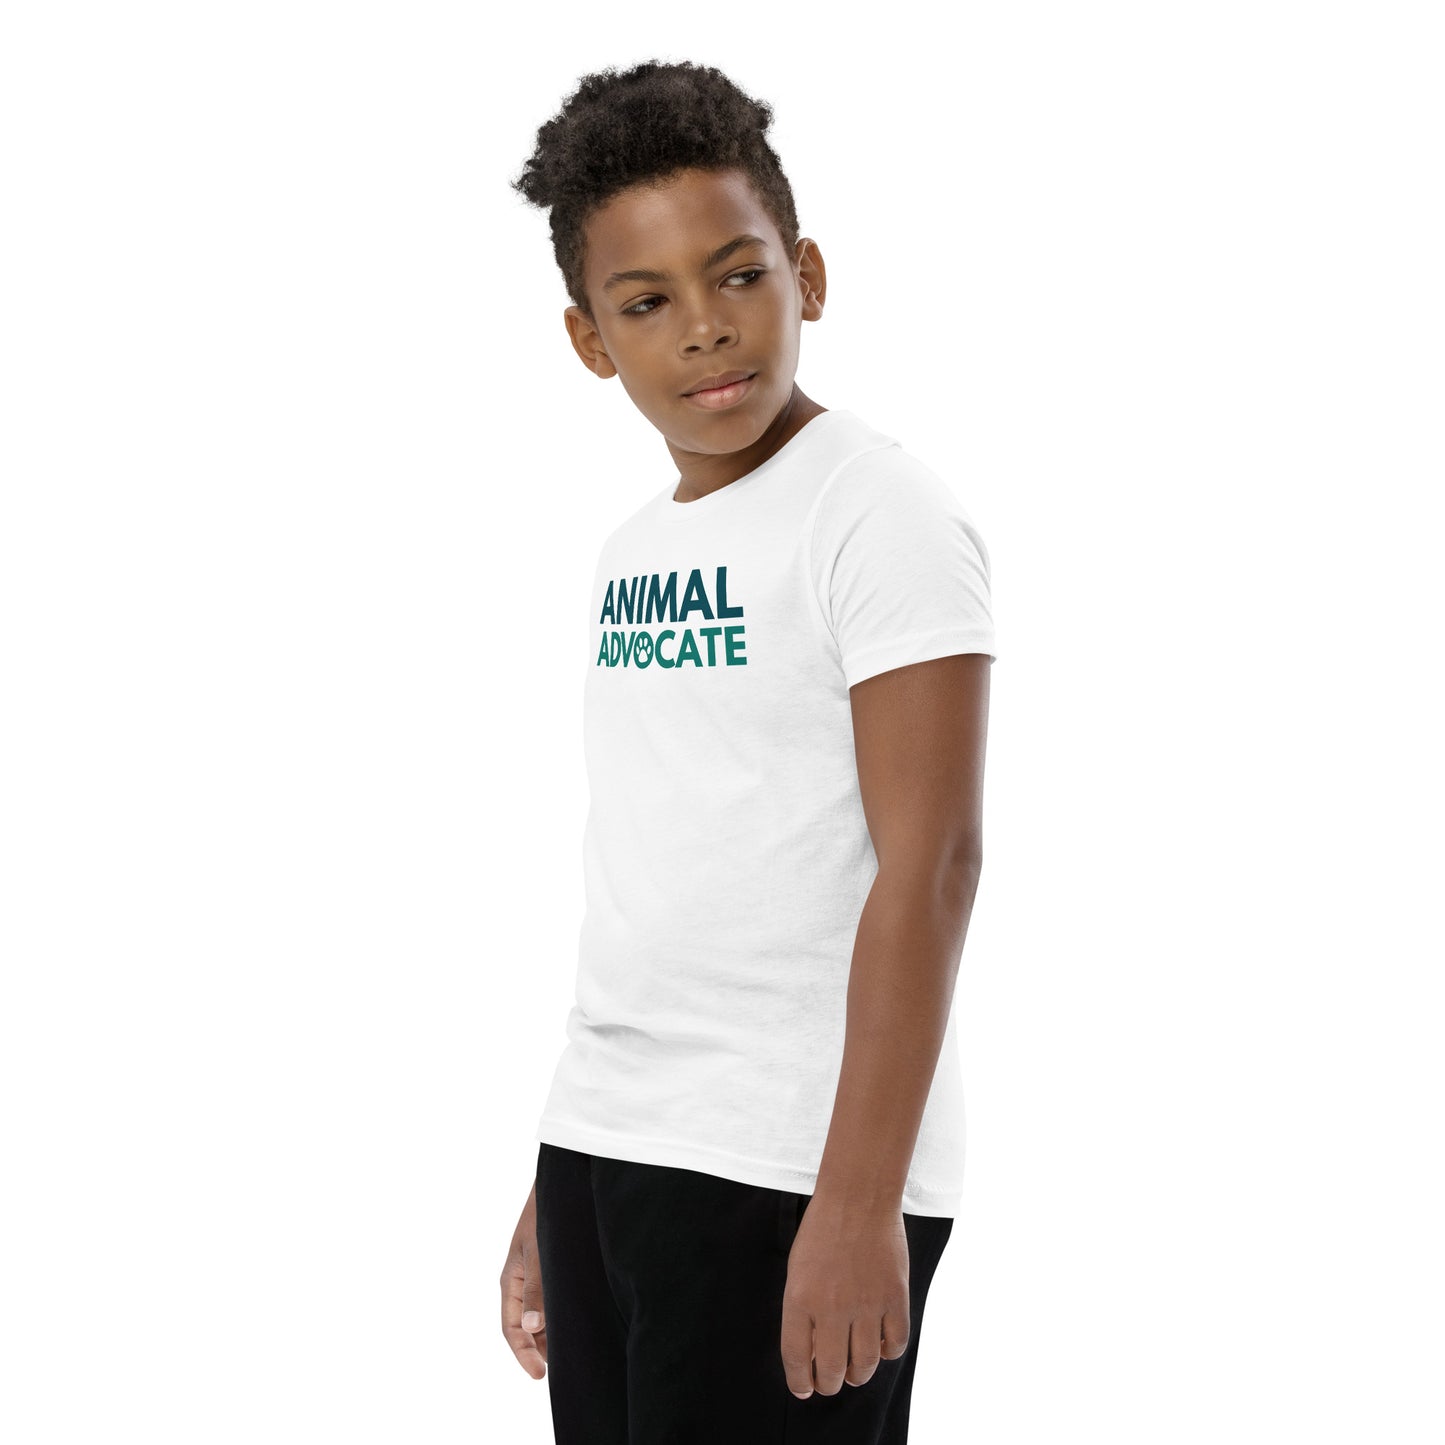 Animal Advocate - Youth Short Sleeve T-Shirt